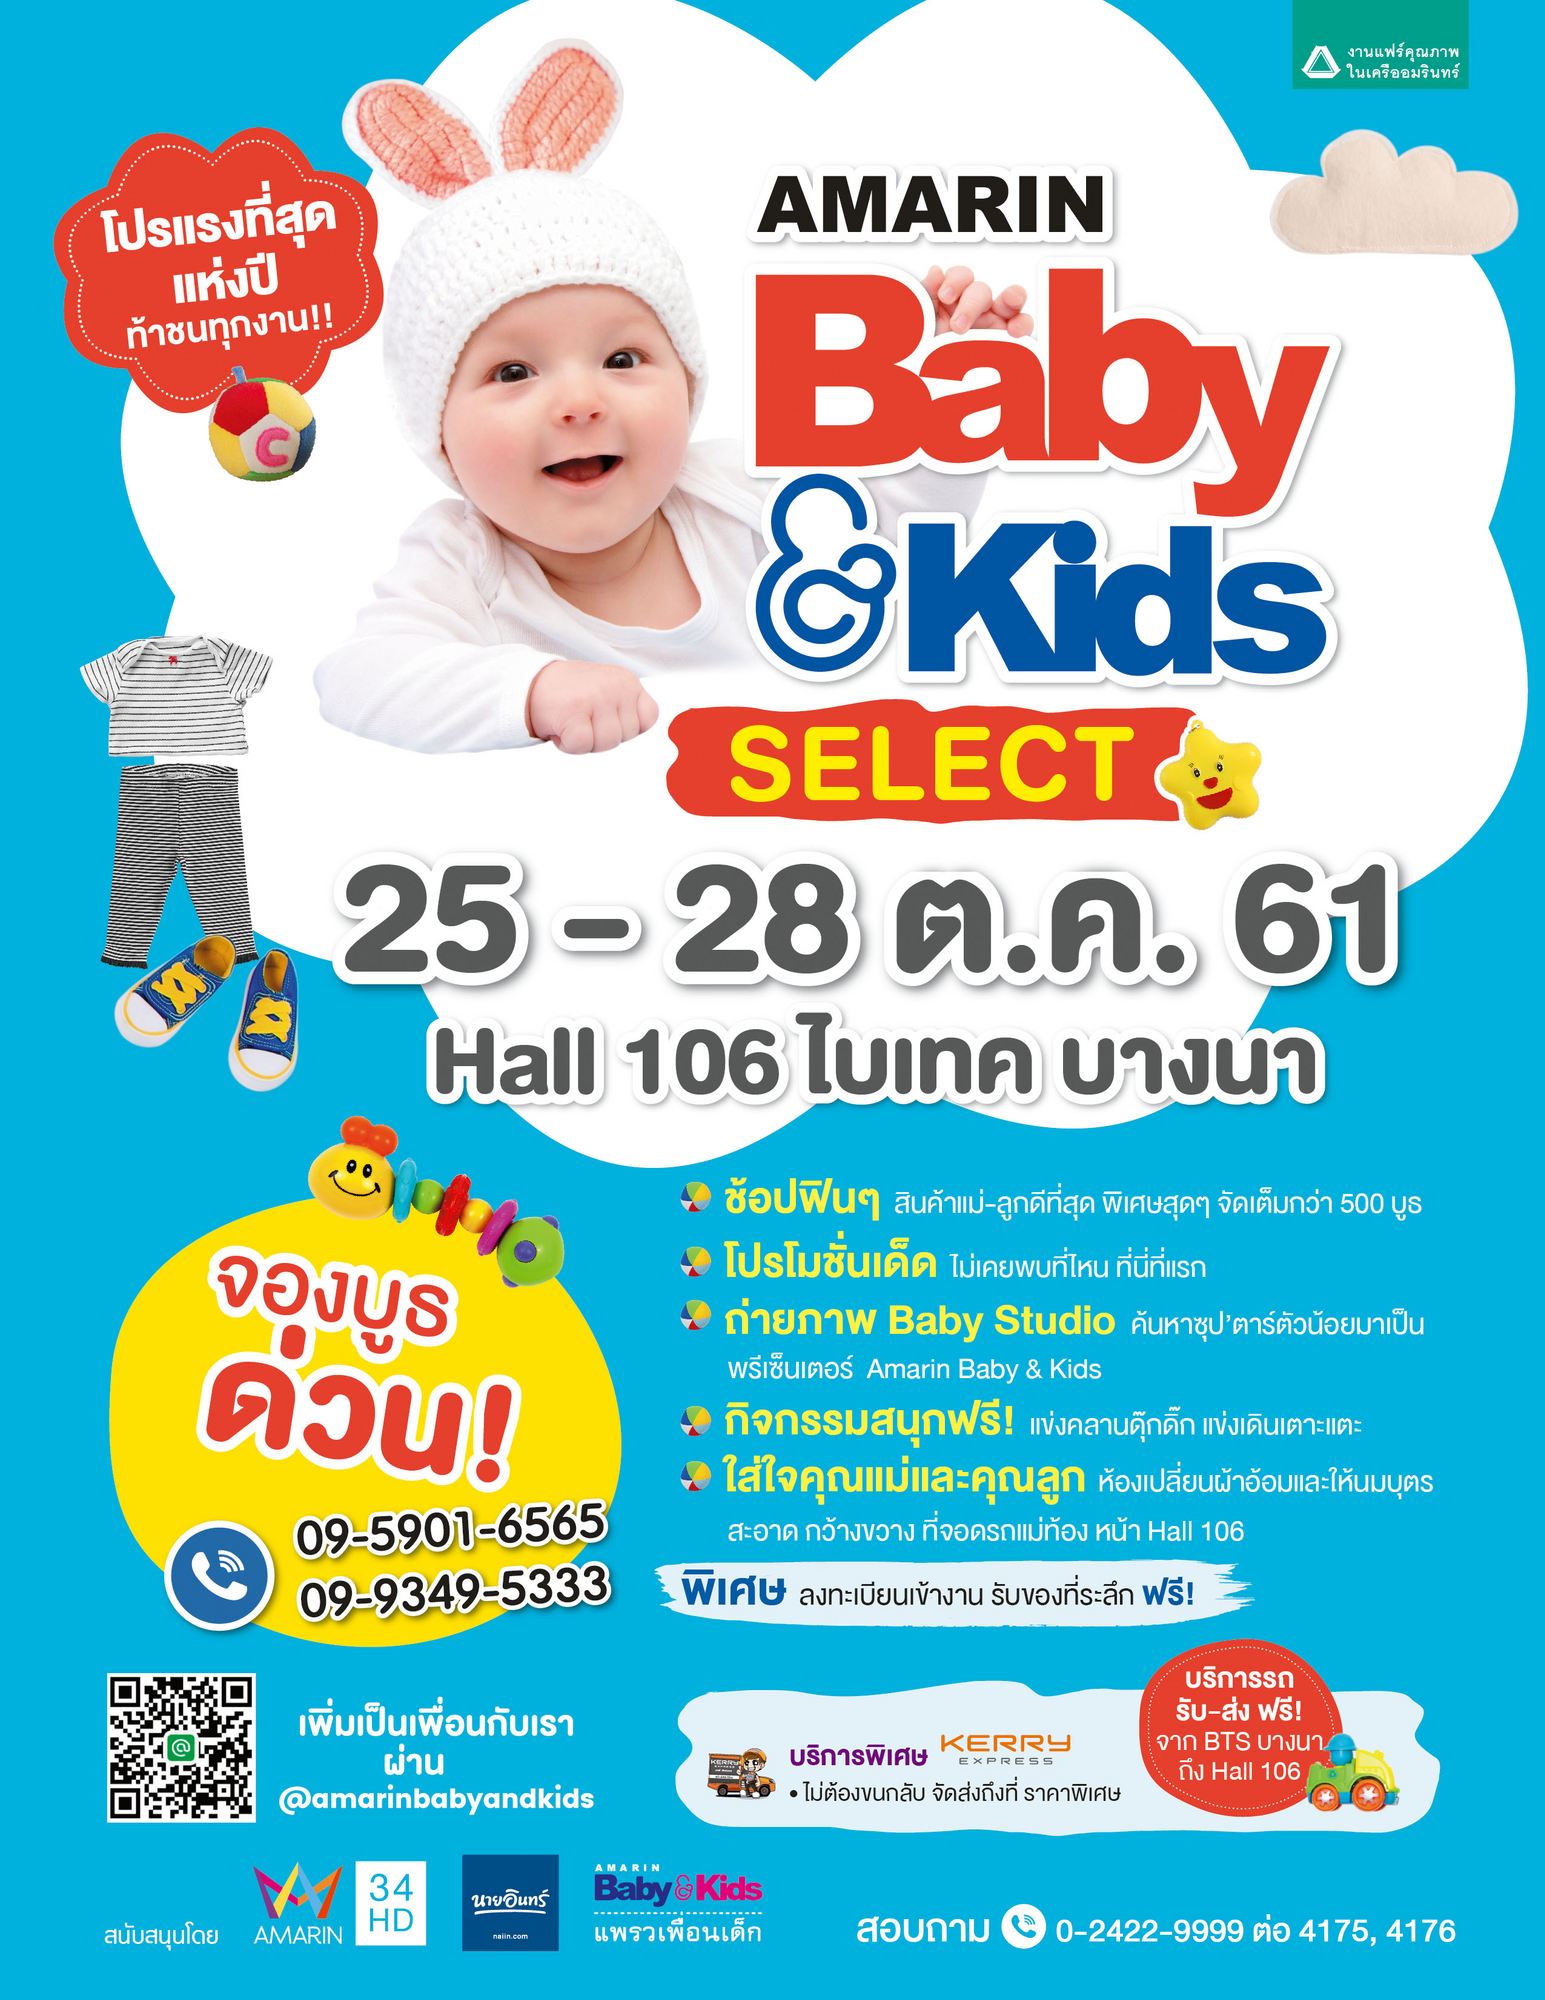 Amarin Baby & Kids Fair Select